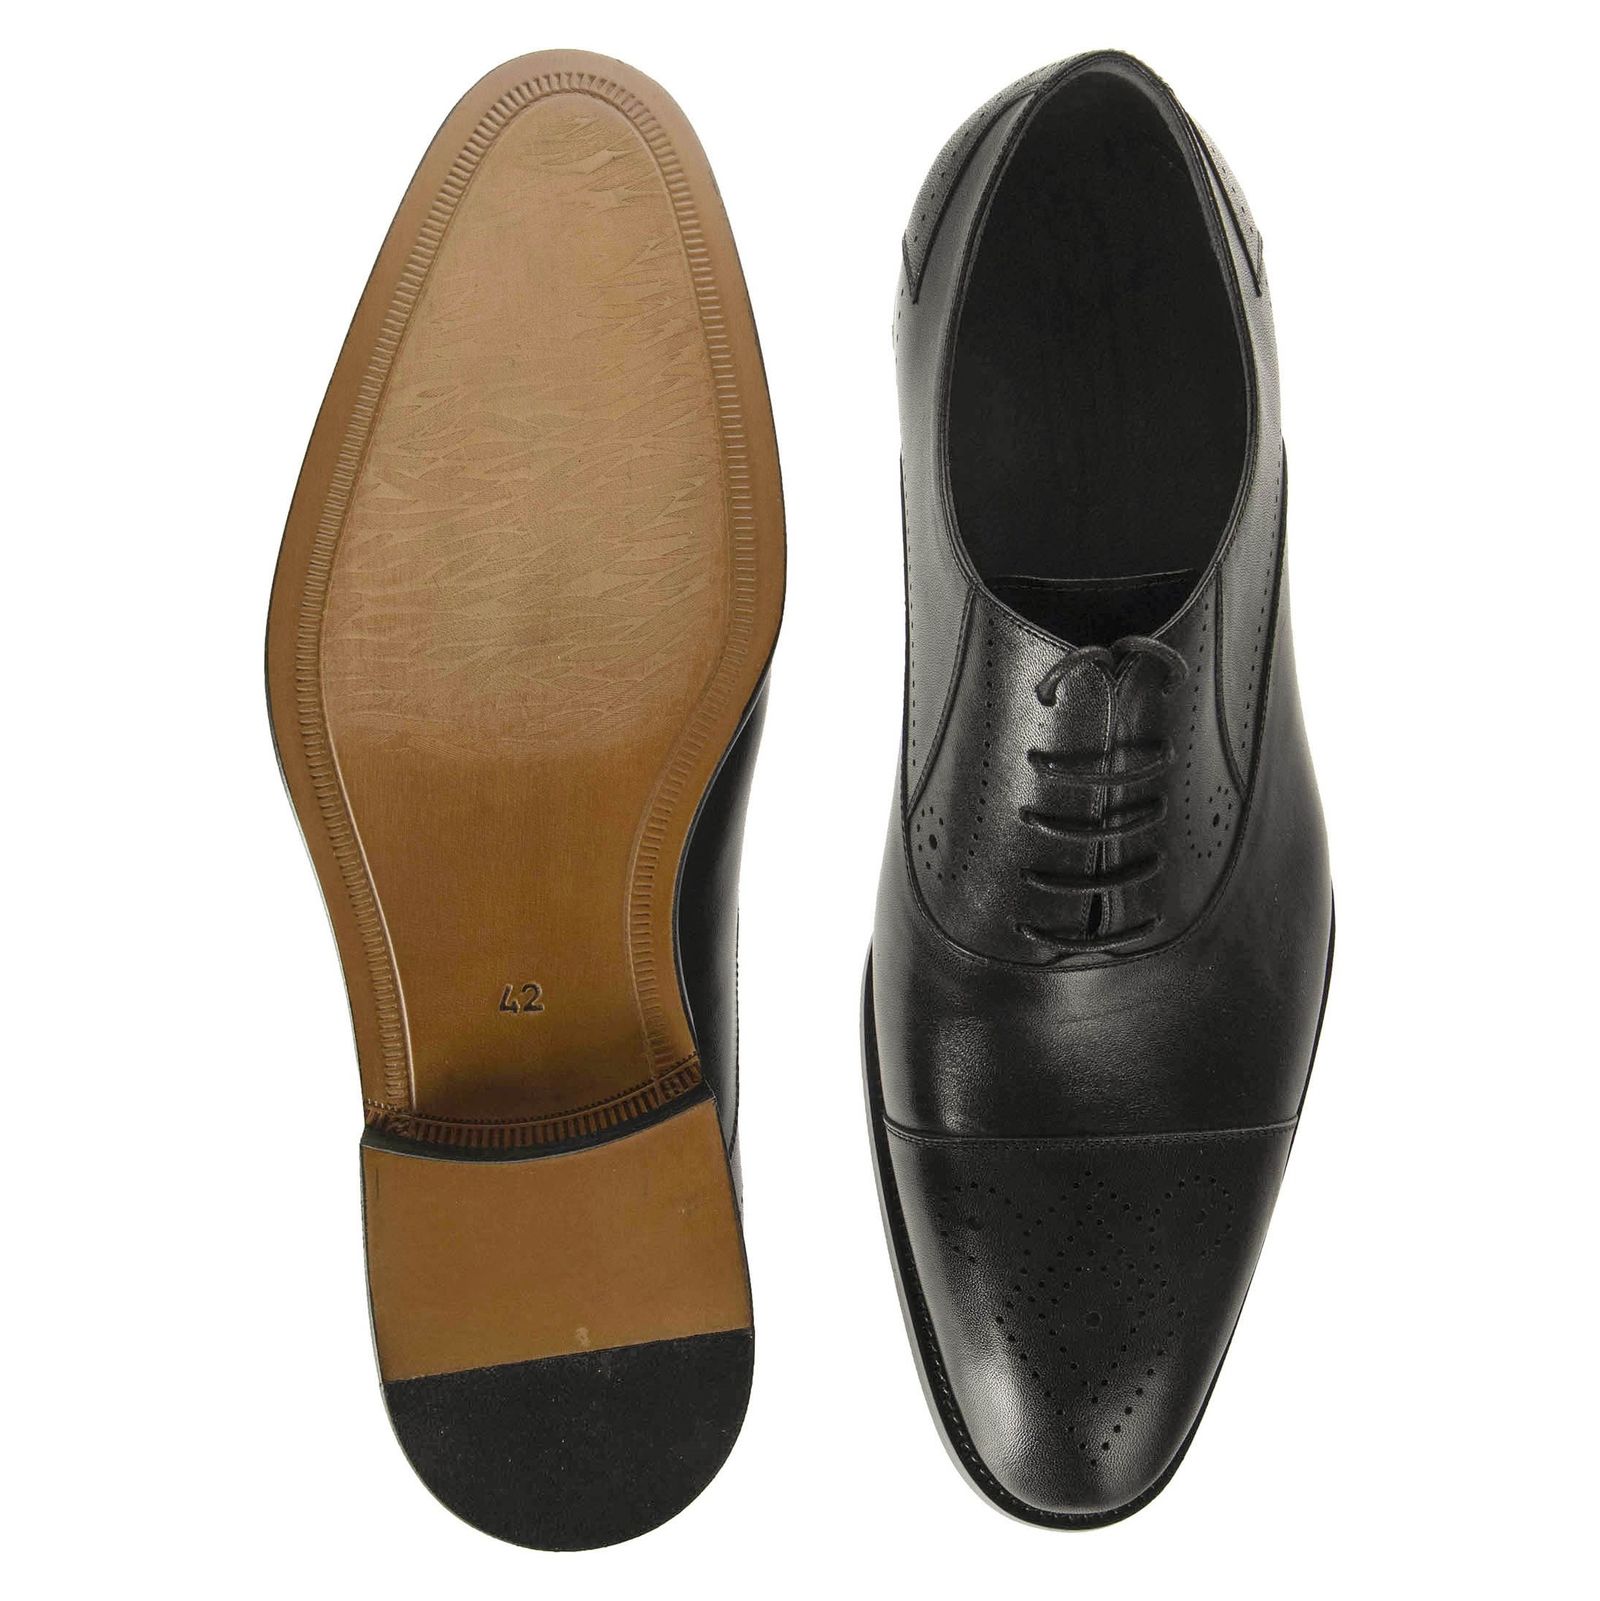 کفش رسمی چرم مردانه - گاندو - مشکی - 5